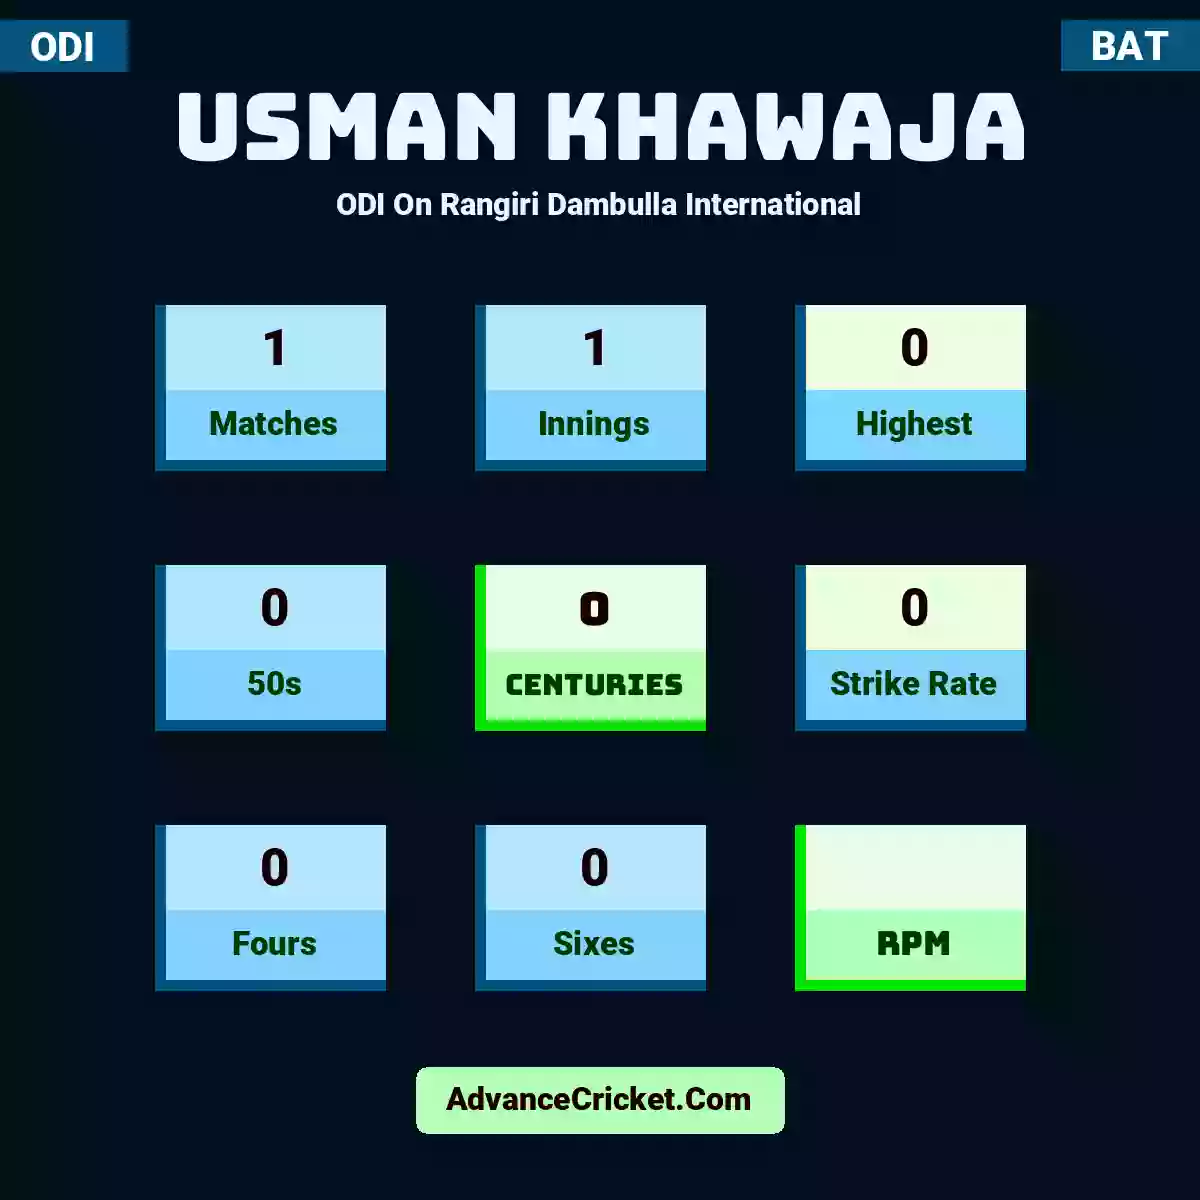 Usman Khawaja ODI  On Rangiri Dambulla International, Usman Khawaja played 1 matches, scored 0 runs as highest, 0 half-centuries, and 0 centuries, with a strike rate of 0. U.Khawaja hit 0 fours and 0 sixes.